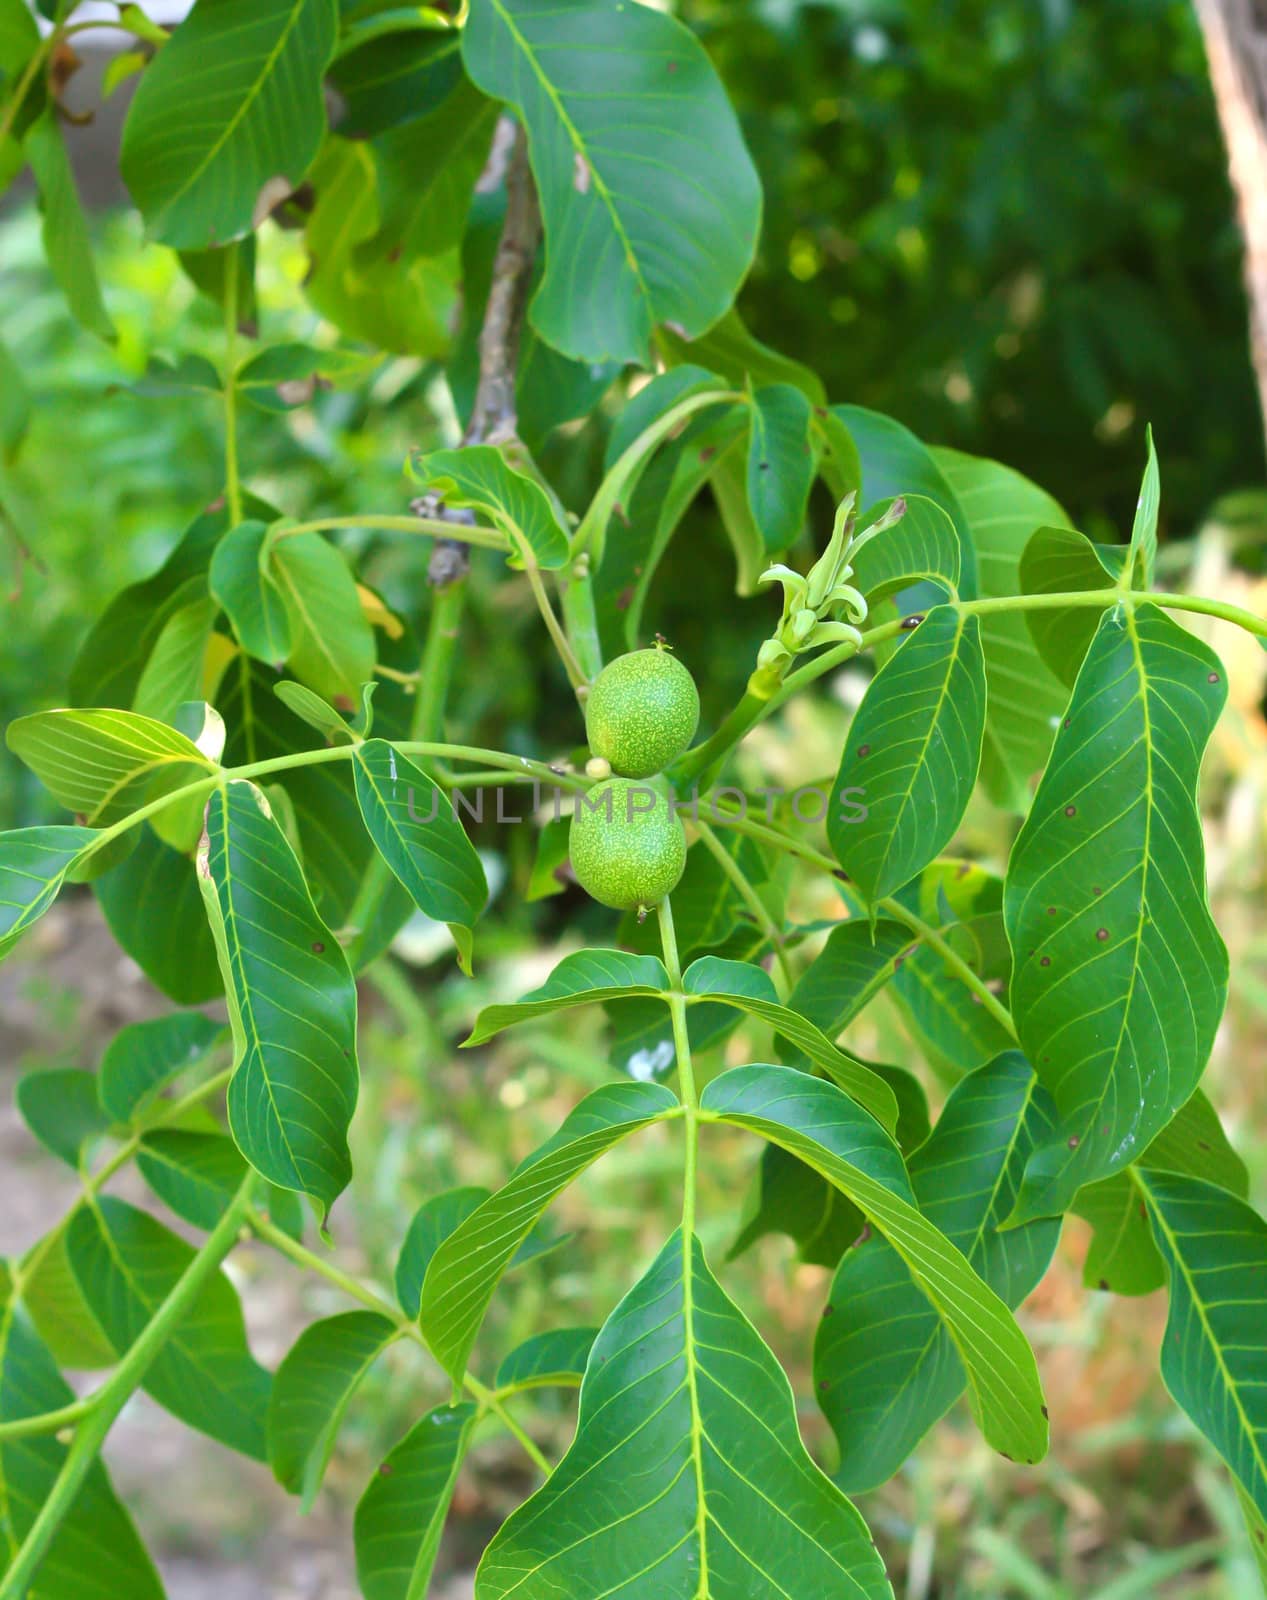 Green walnuts growing on a tree, close up  by schankz